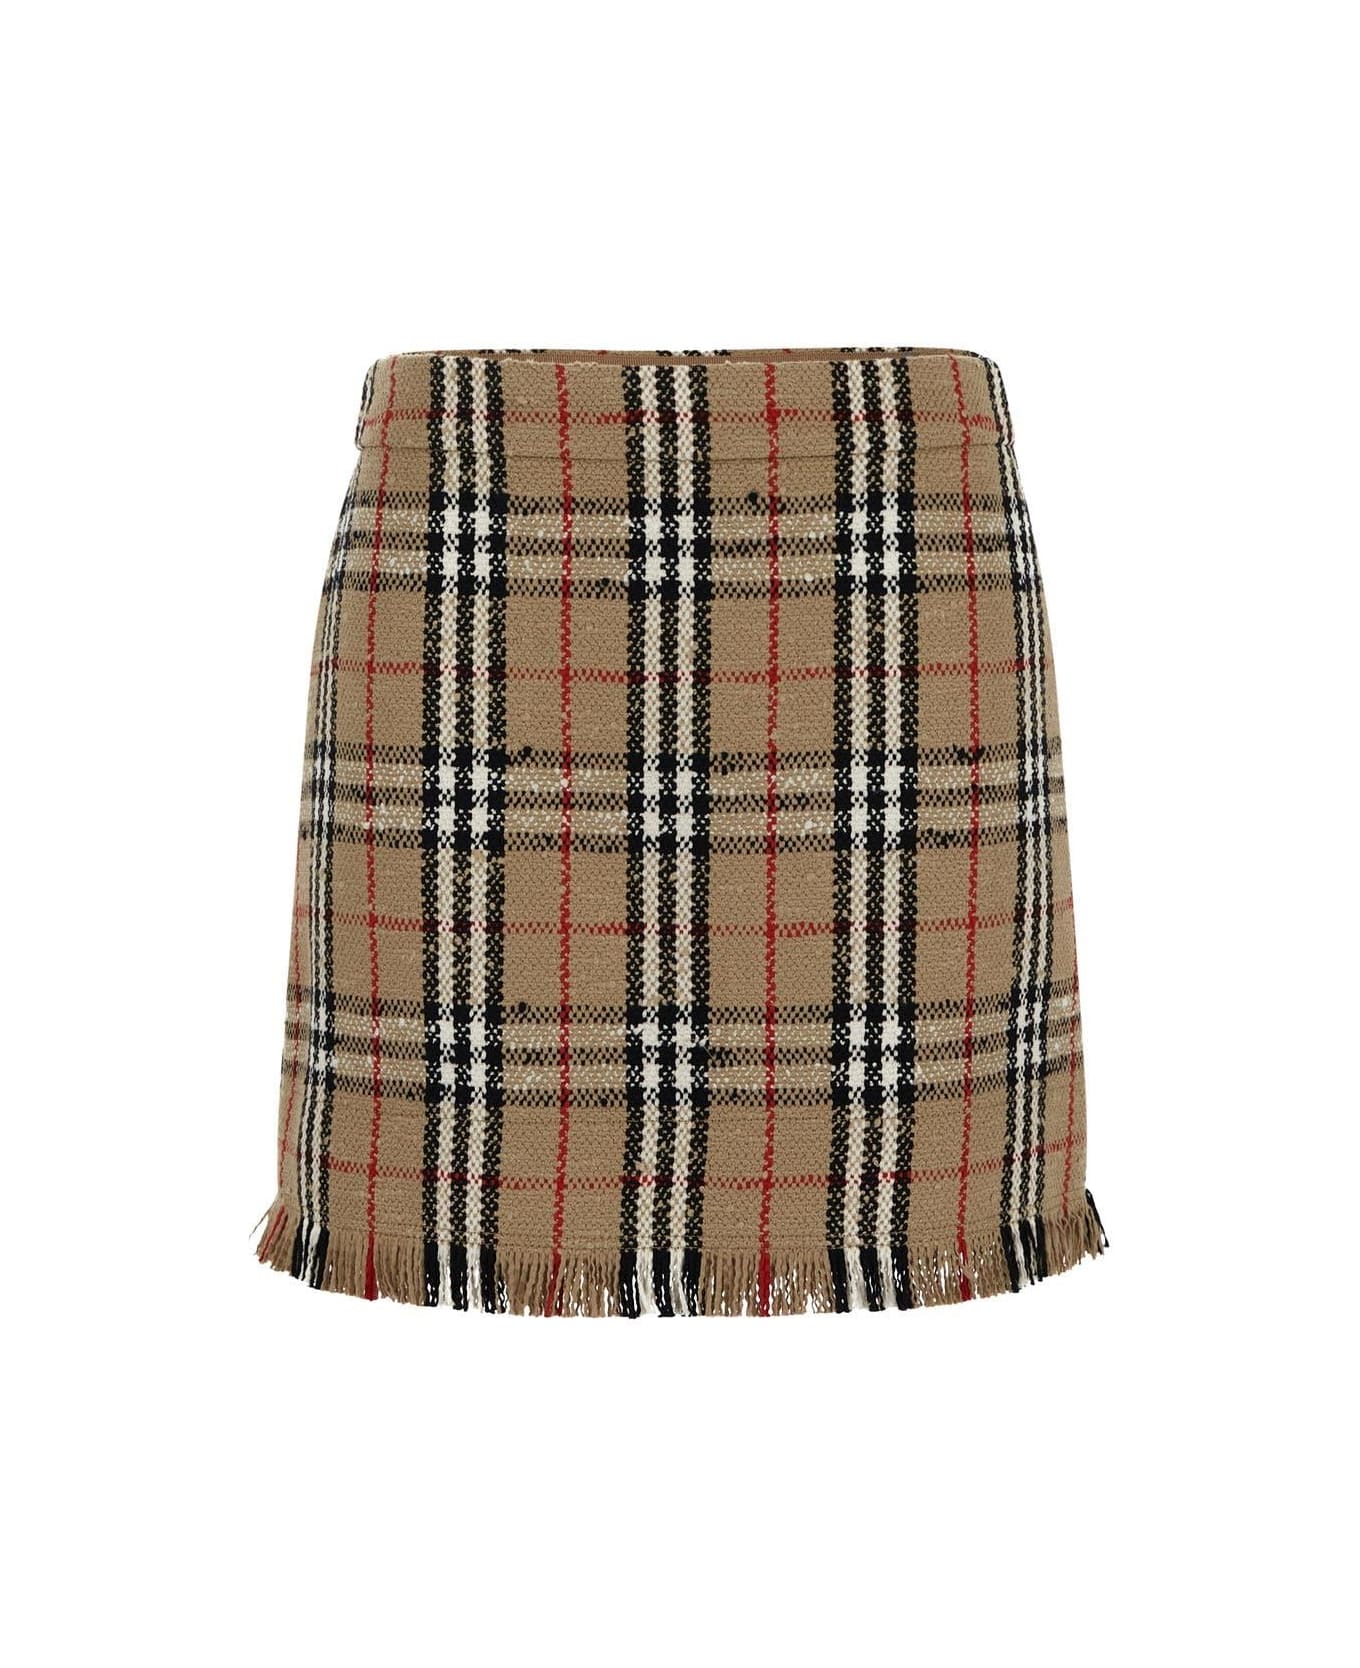 Burberry Vintage Check Bouclè Mini Skirt - Archive beige ip chk